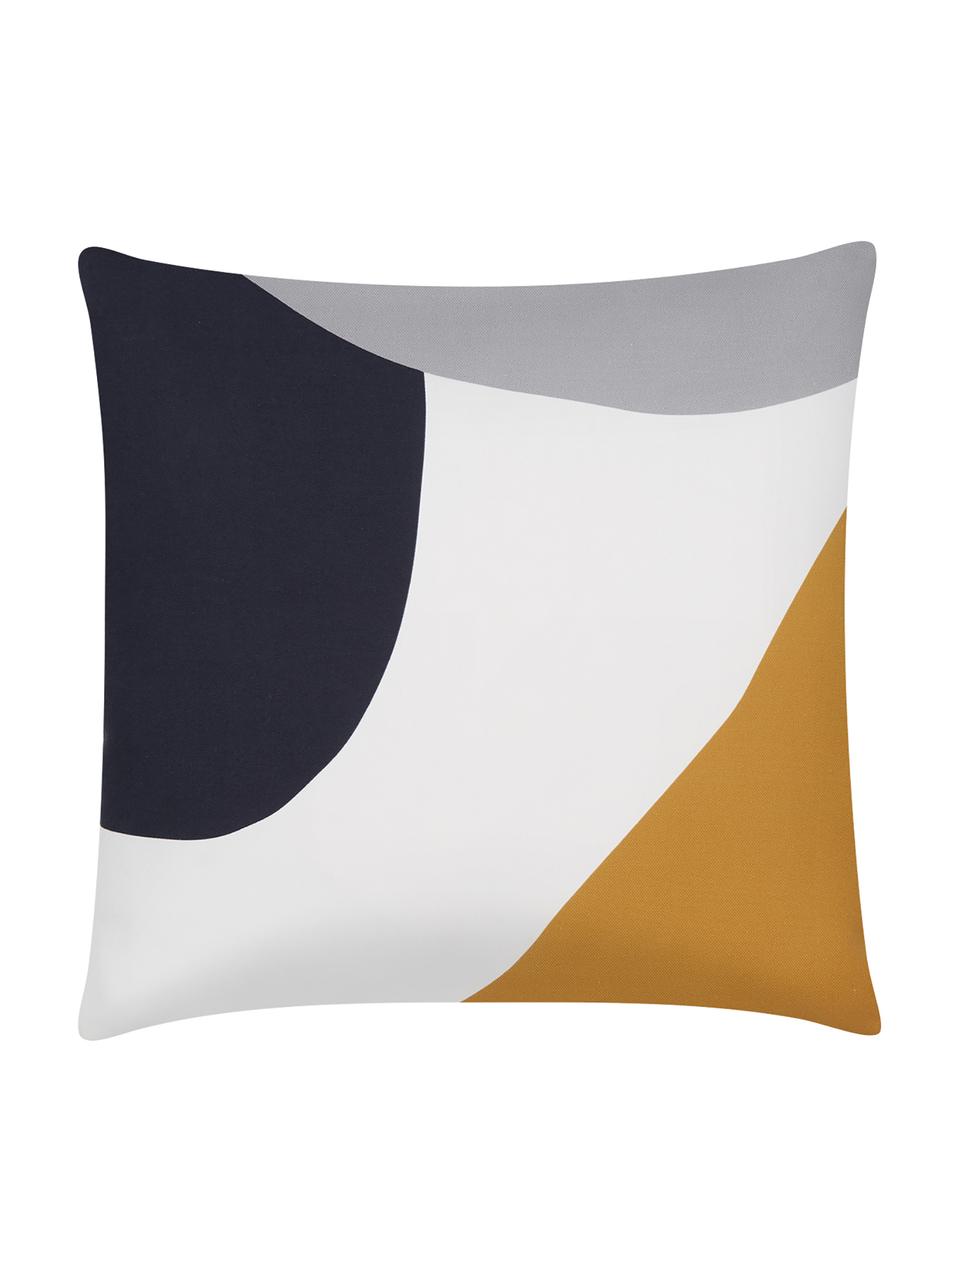 Federa arredo con forme geometriche Linn, Bianco, blu scuro, grigio, arancione, Larg. 40 x Lung. 40 cm